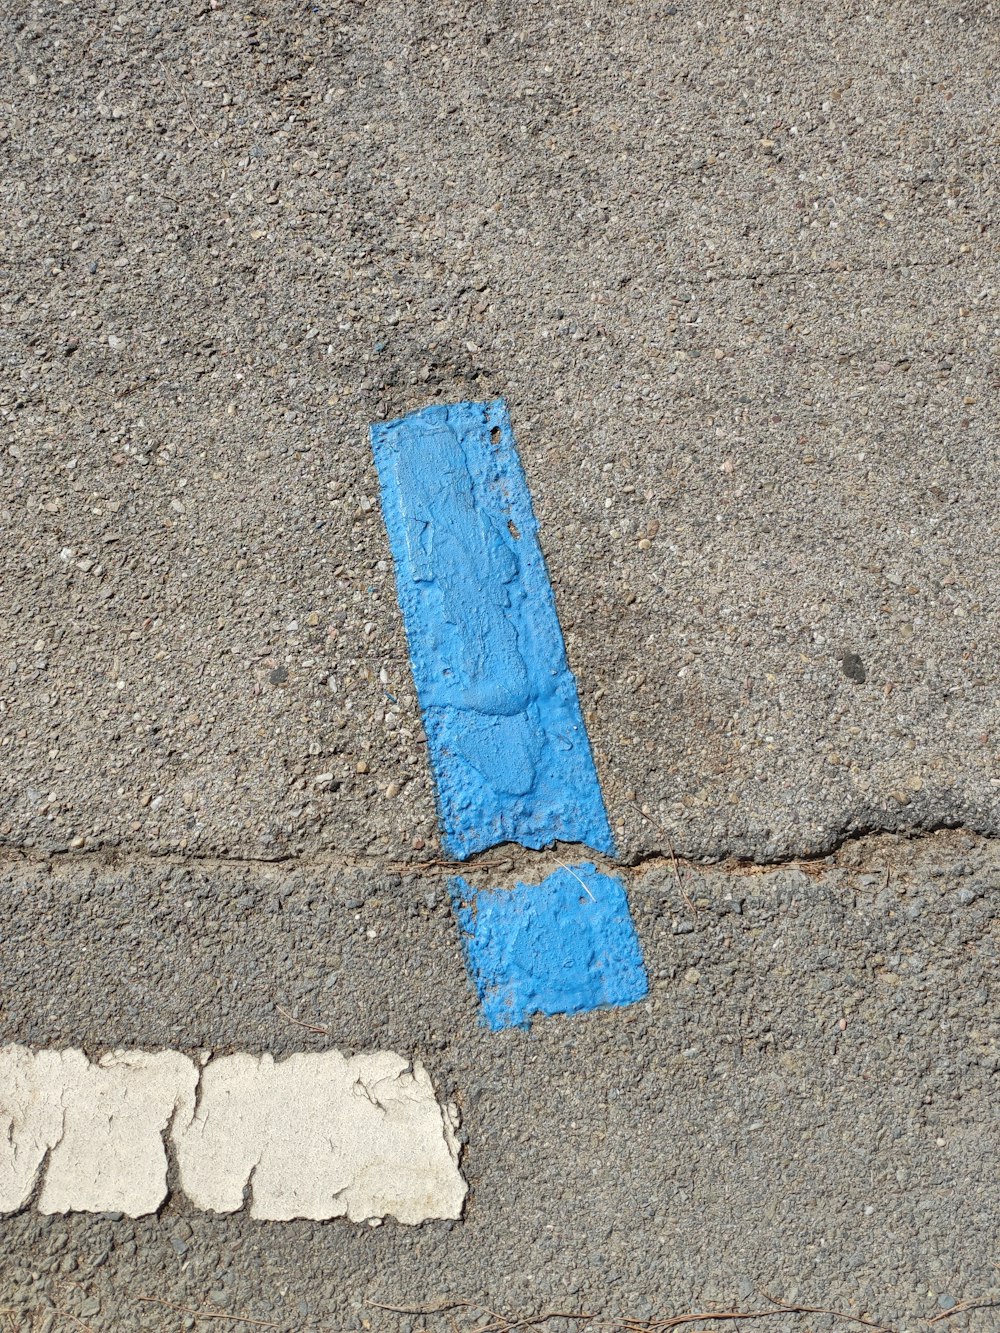 blue rectangular board on gray concrete floor